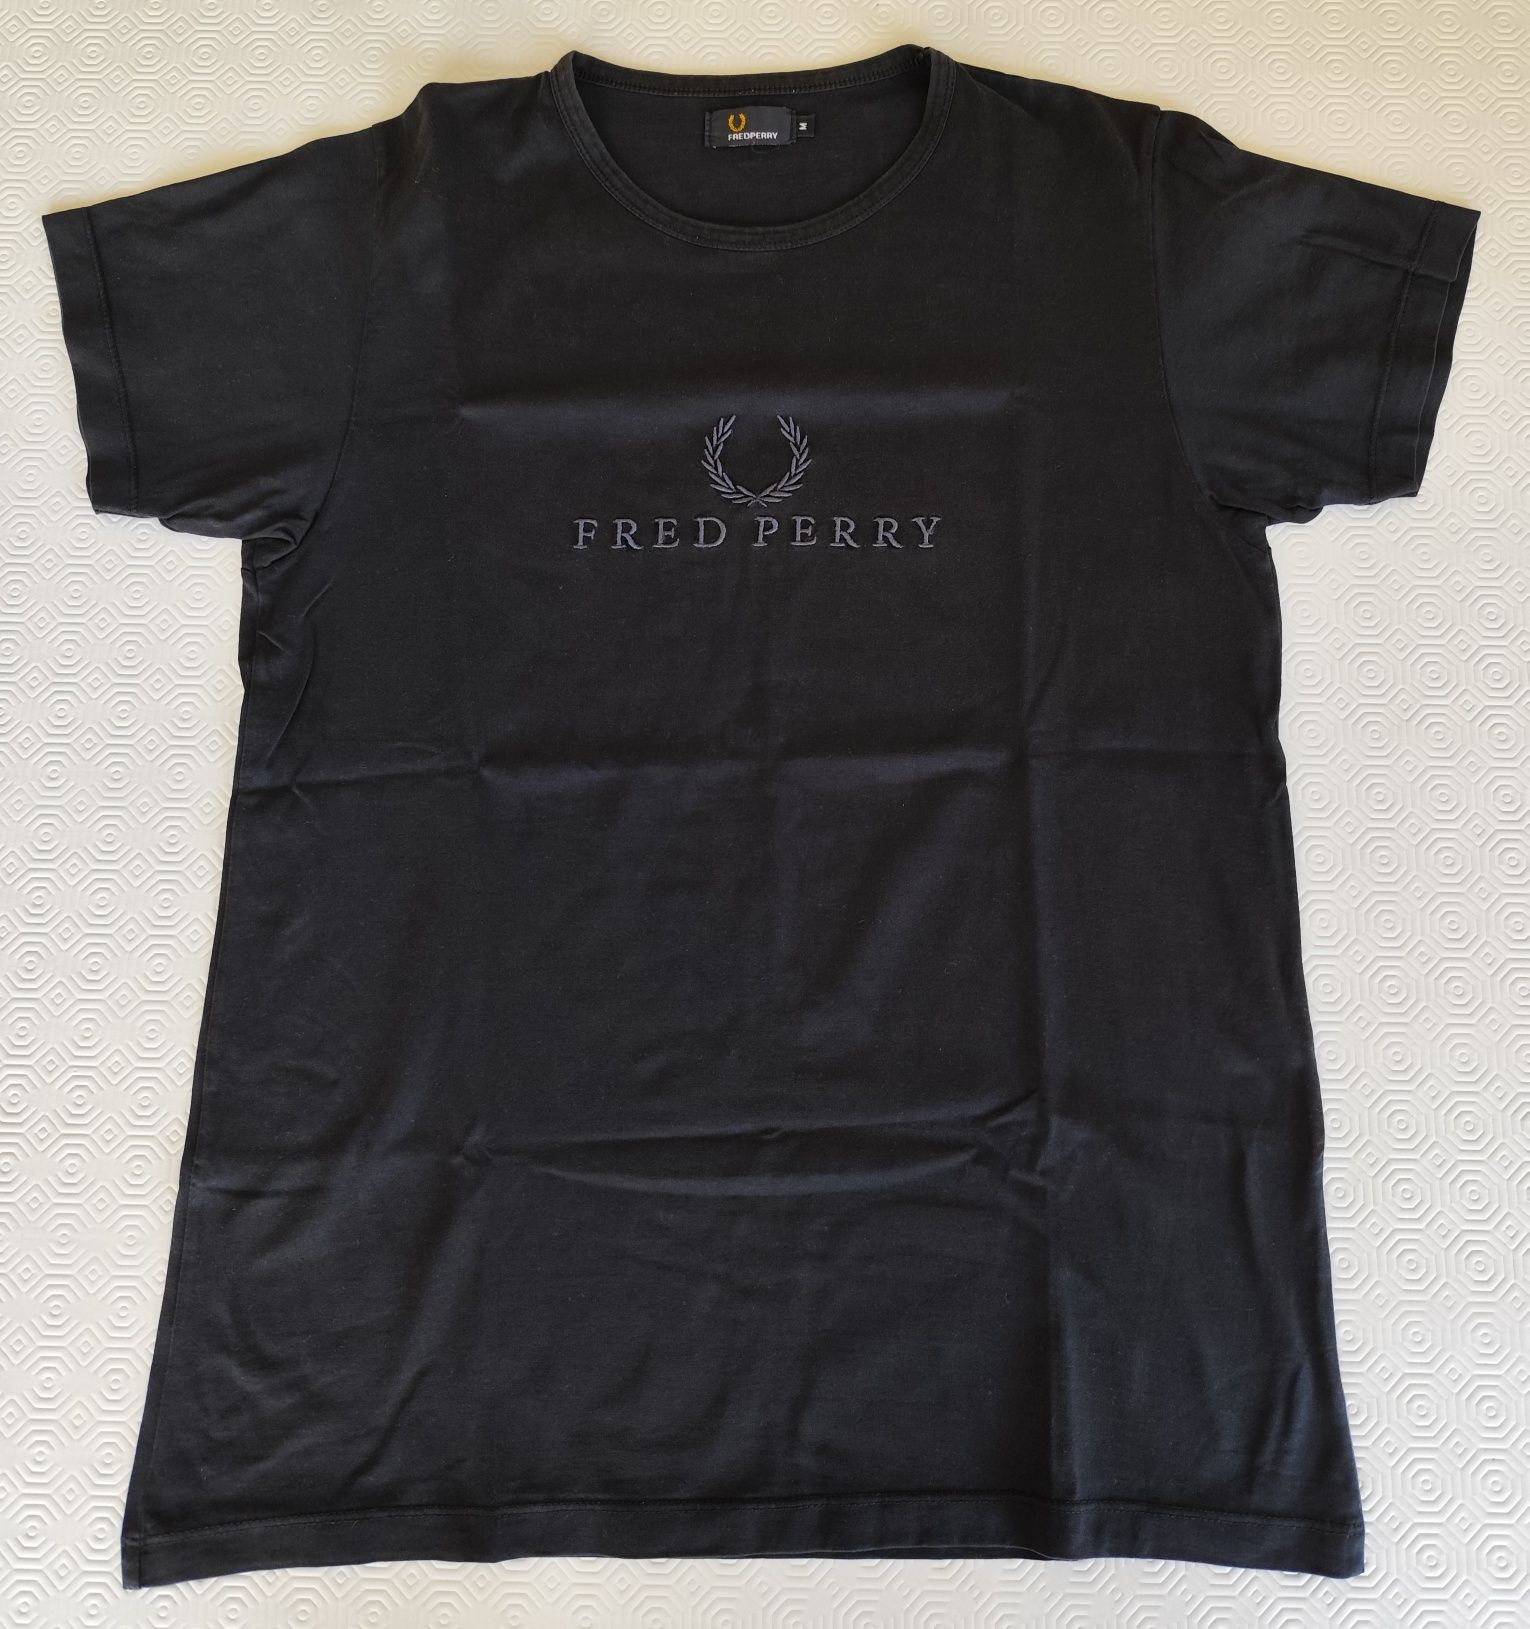 T-shirt Preta Fred Perry Original - Bordada